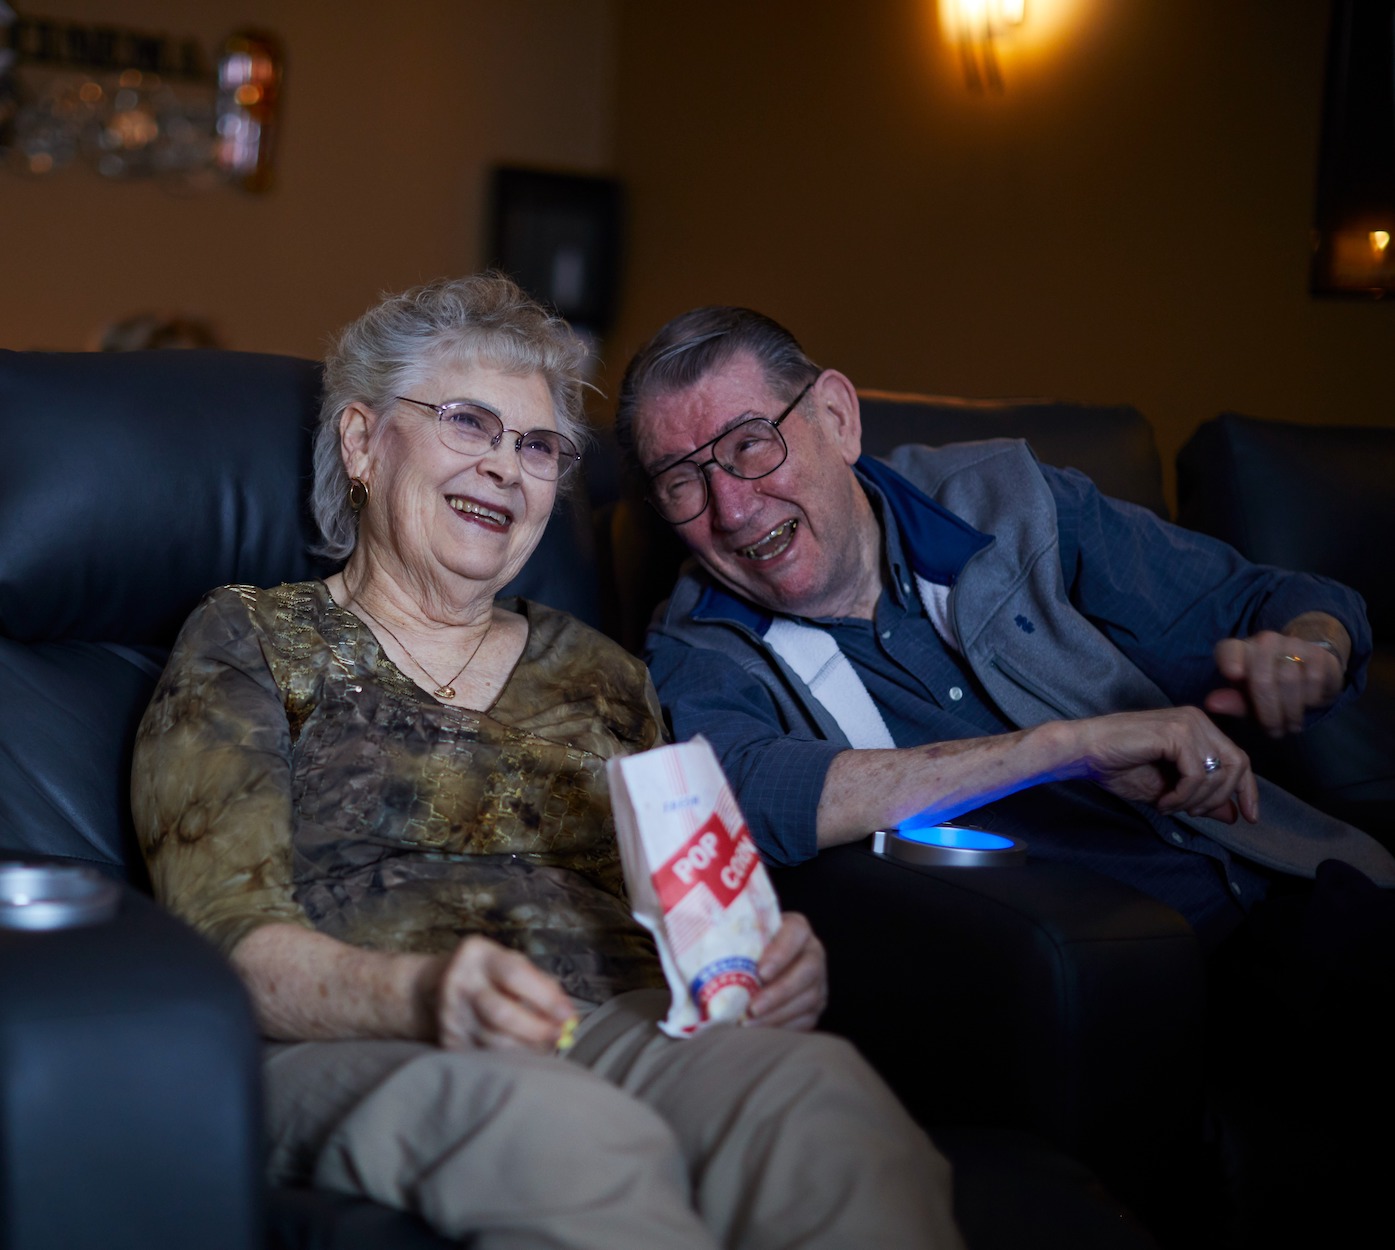 Seniors watching a movie